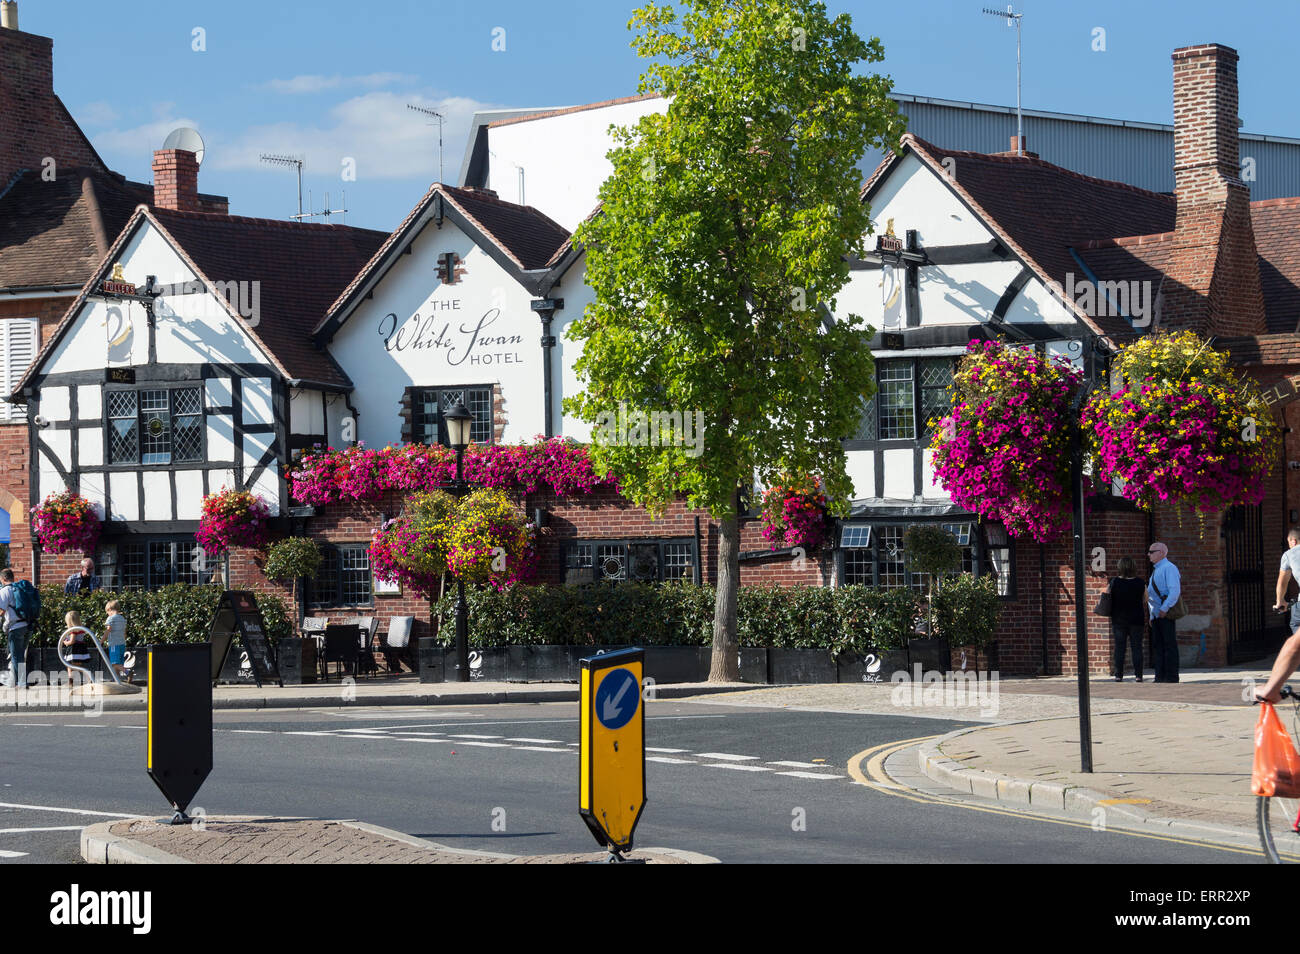 The White Swan Hotel, flower displays,  Stratford-upon-Avon, Warwickshire,  England UK Stock Photo